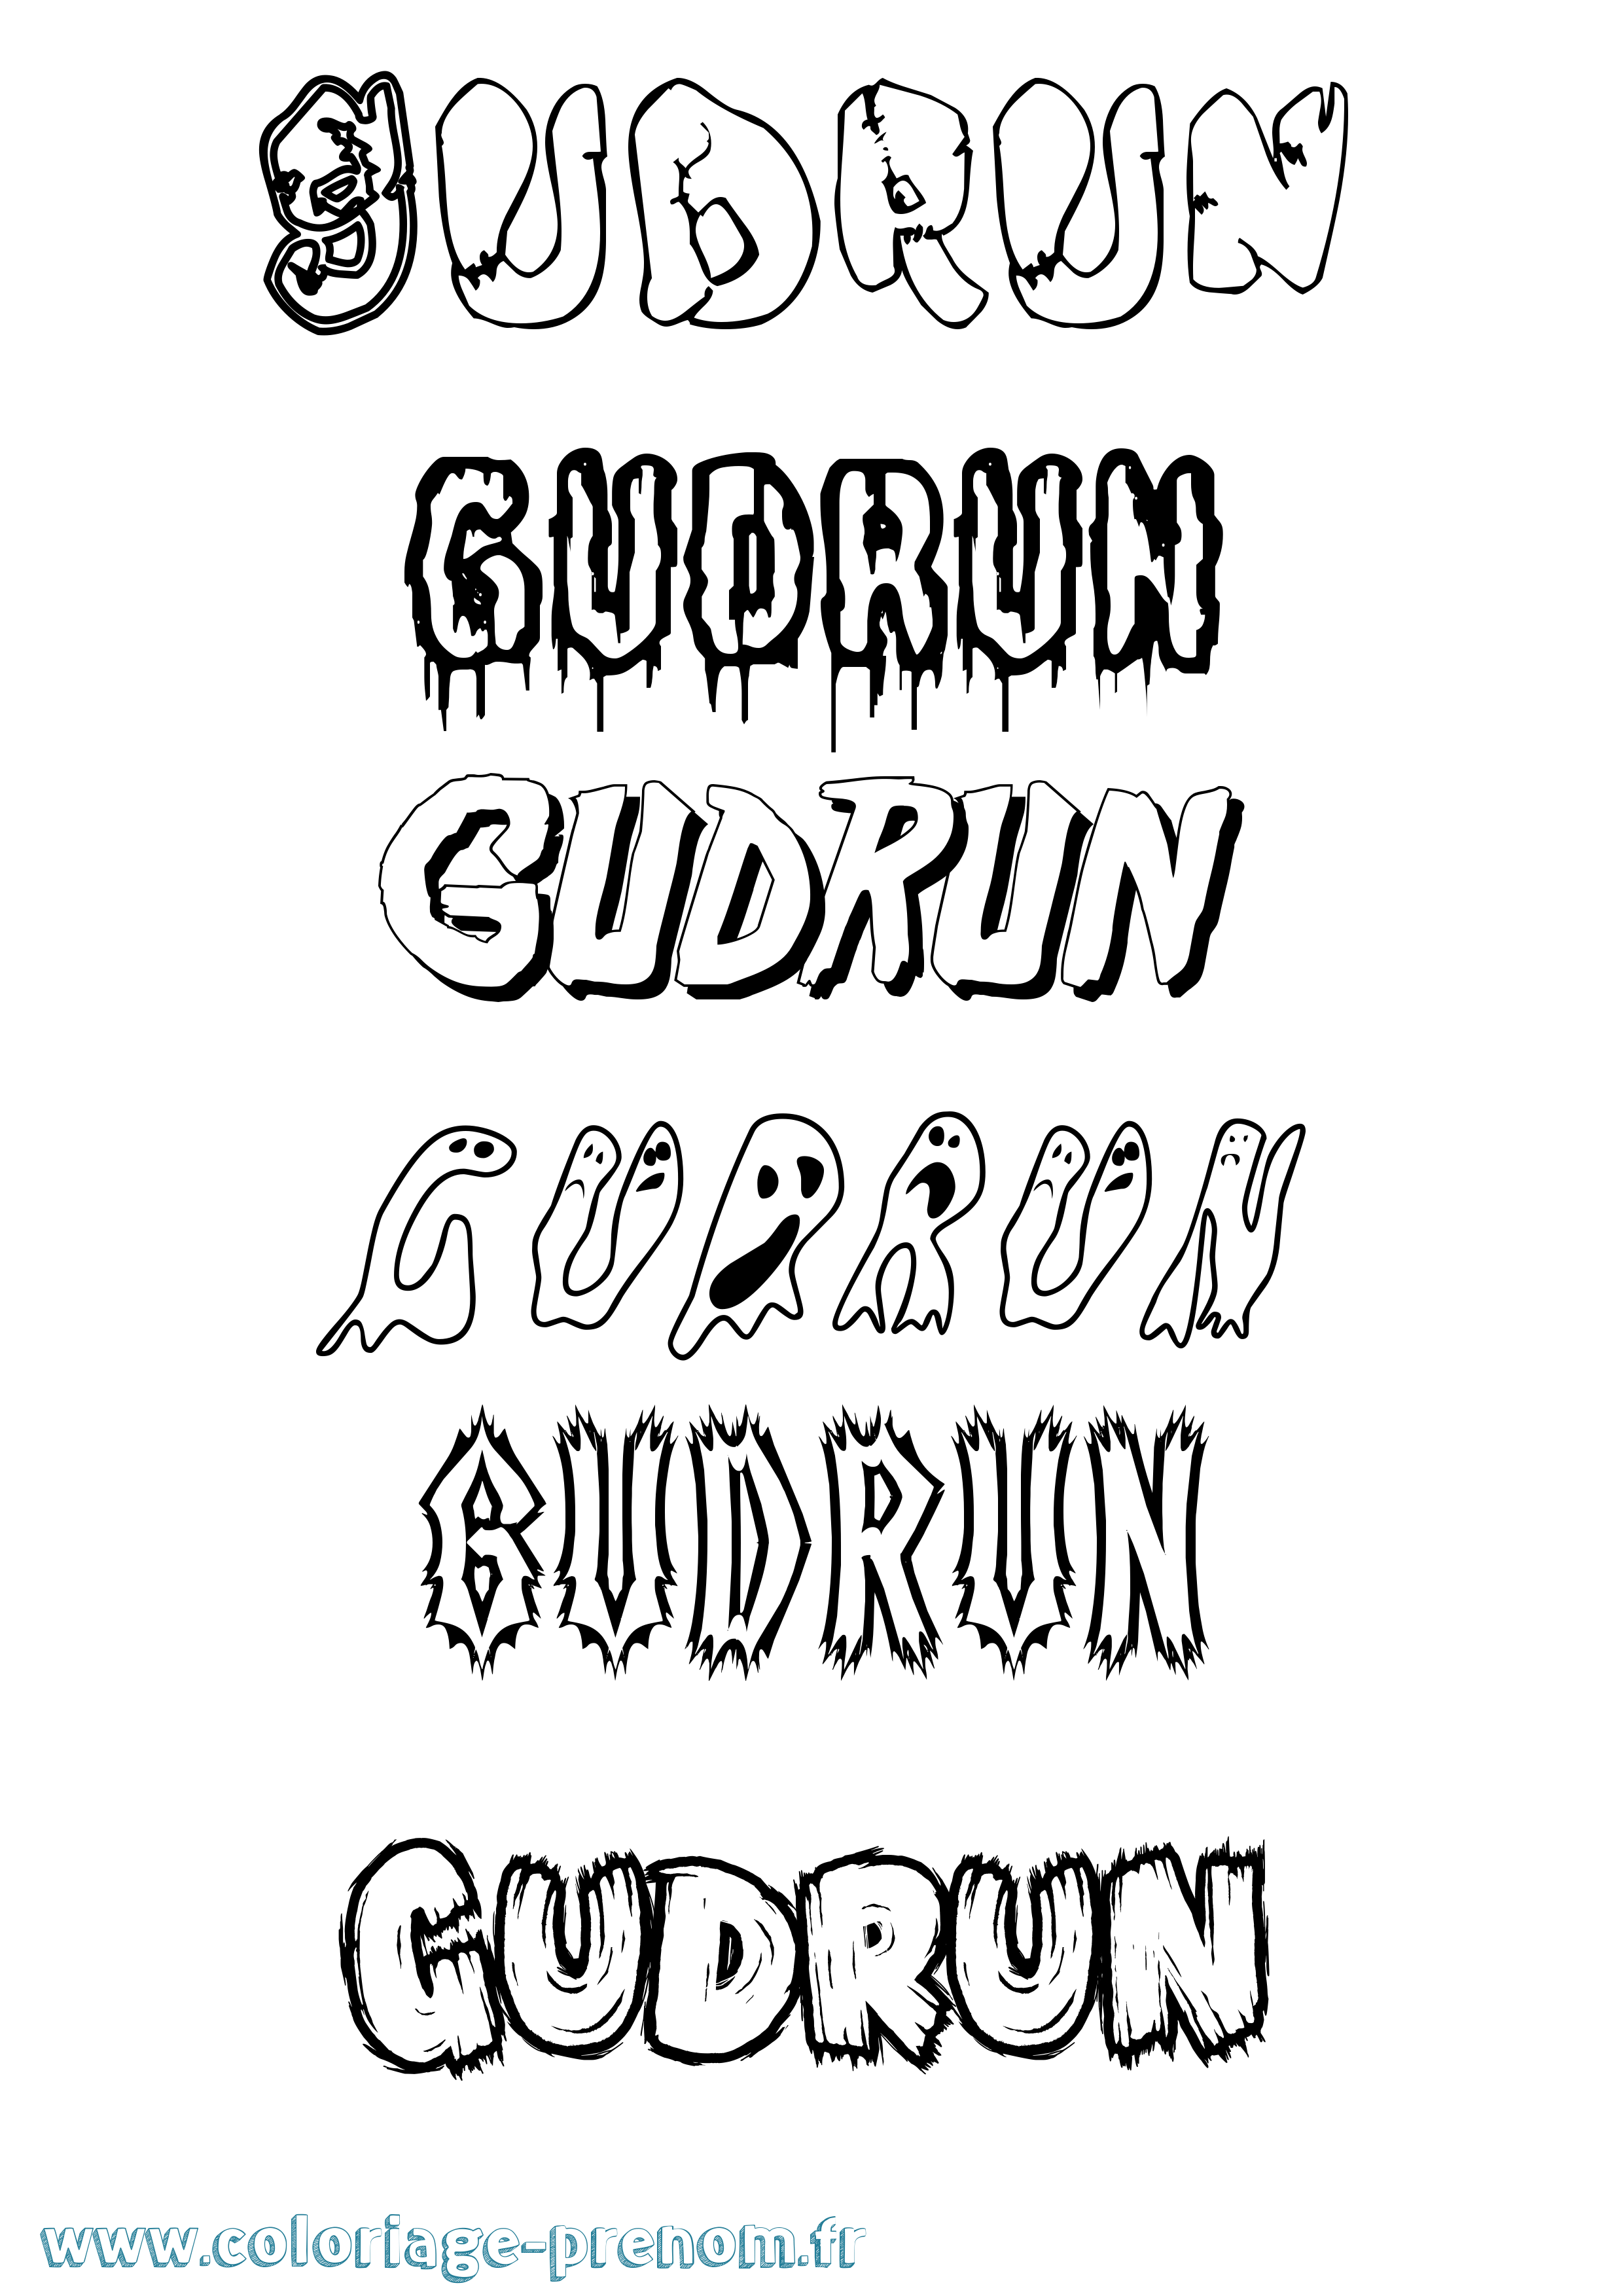 Coloriage prénom Gudrun Frisson